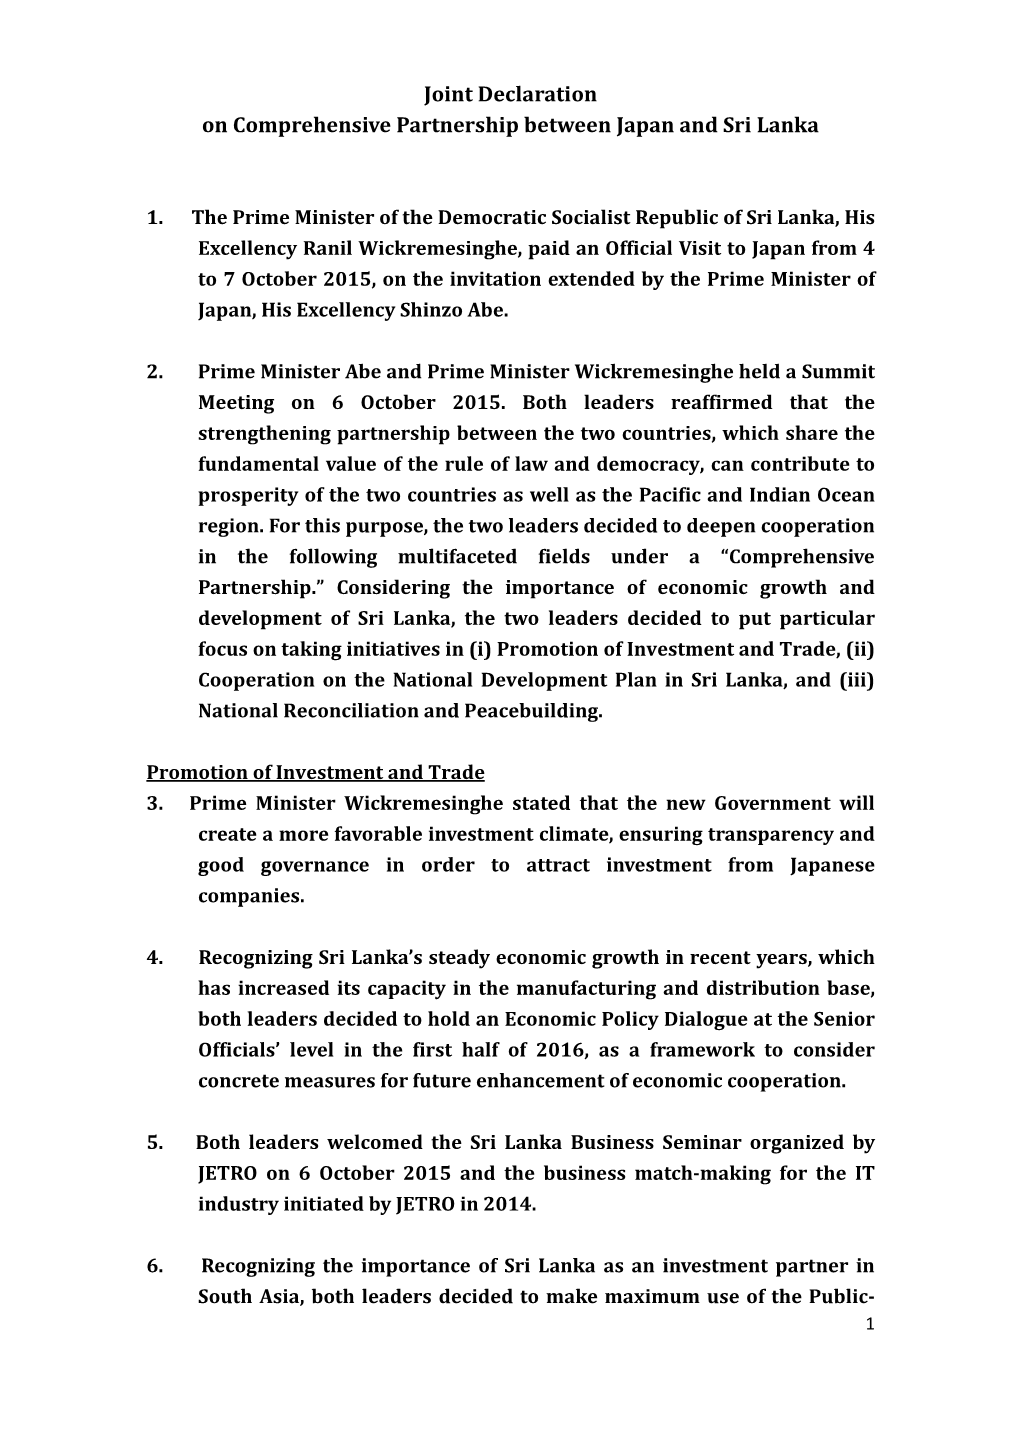 Joint Declaration on Comprehensive Partnership Between Japan and Sri Lanka